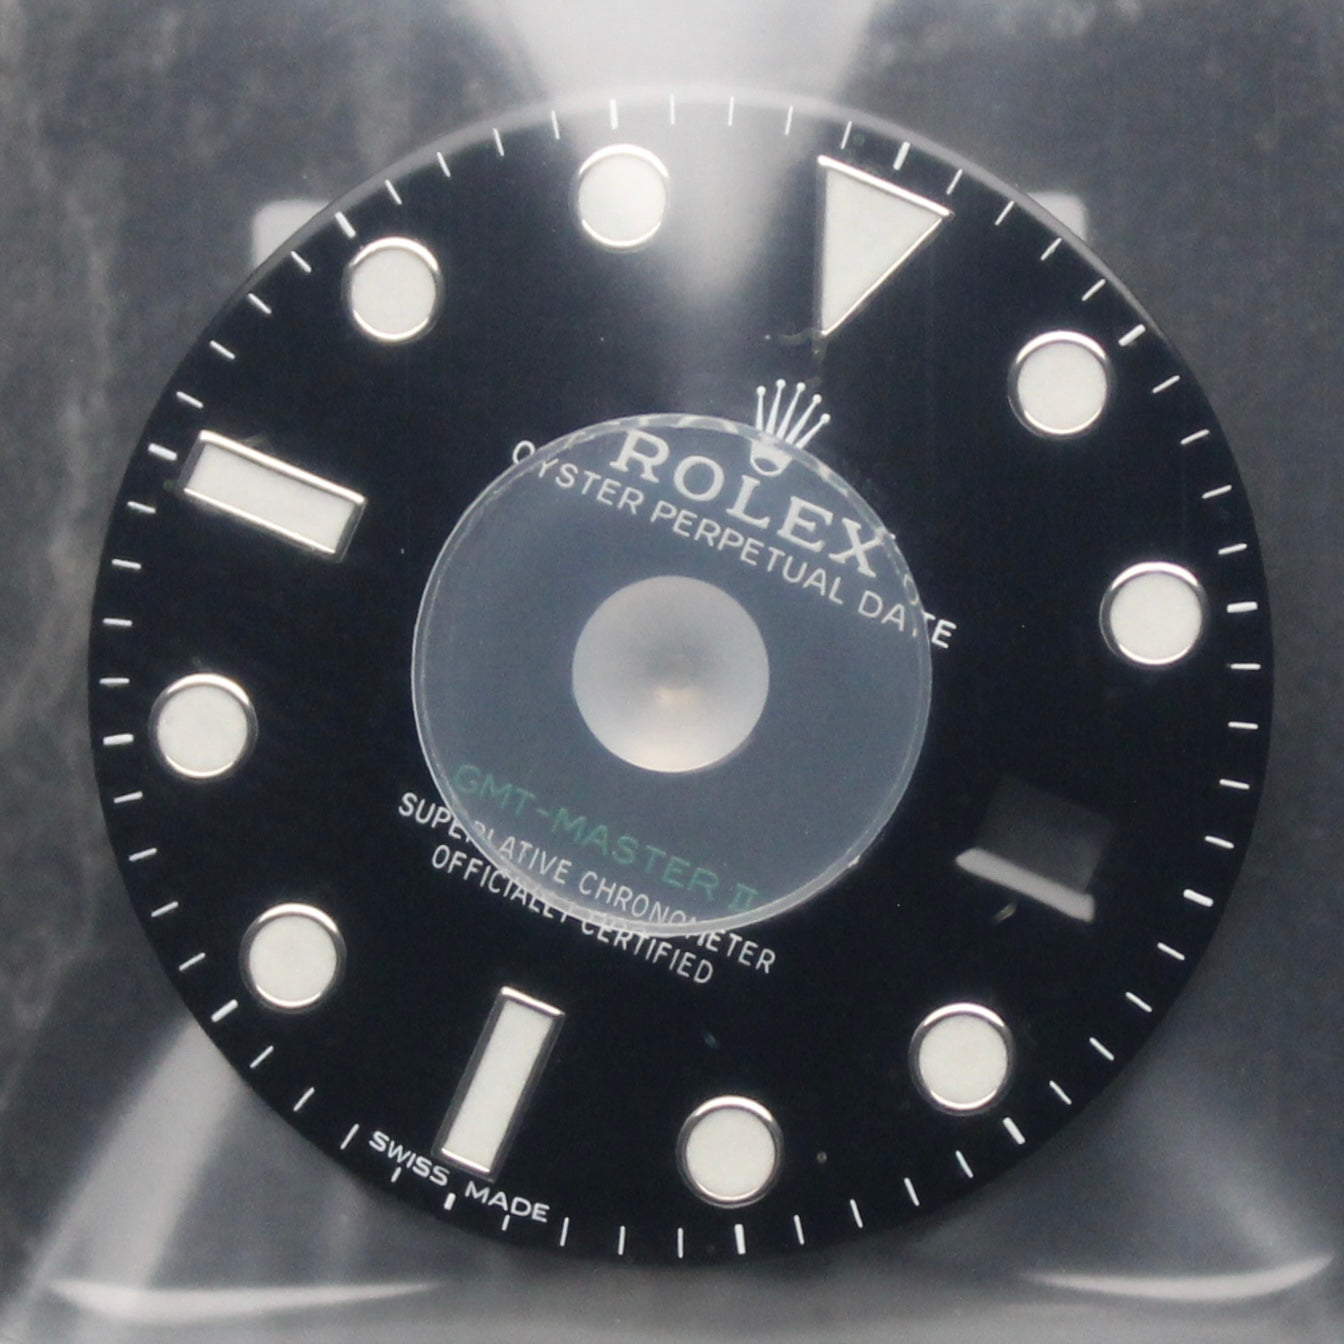 NEW Rolex 13-116718-120 Dial 116710LN GMT Master II Quadrante Chromalight In Blister